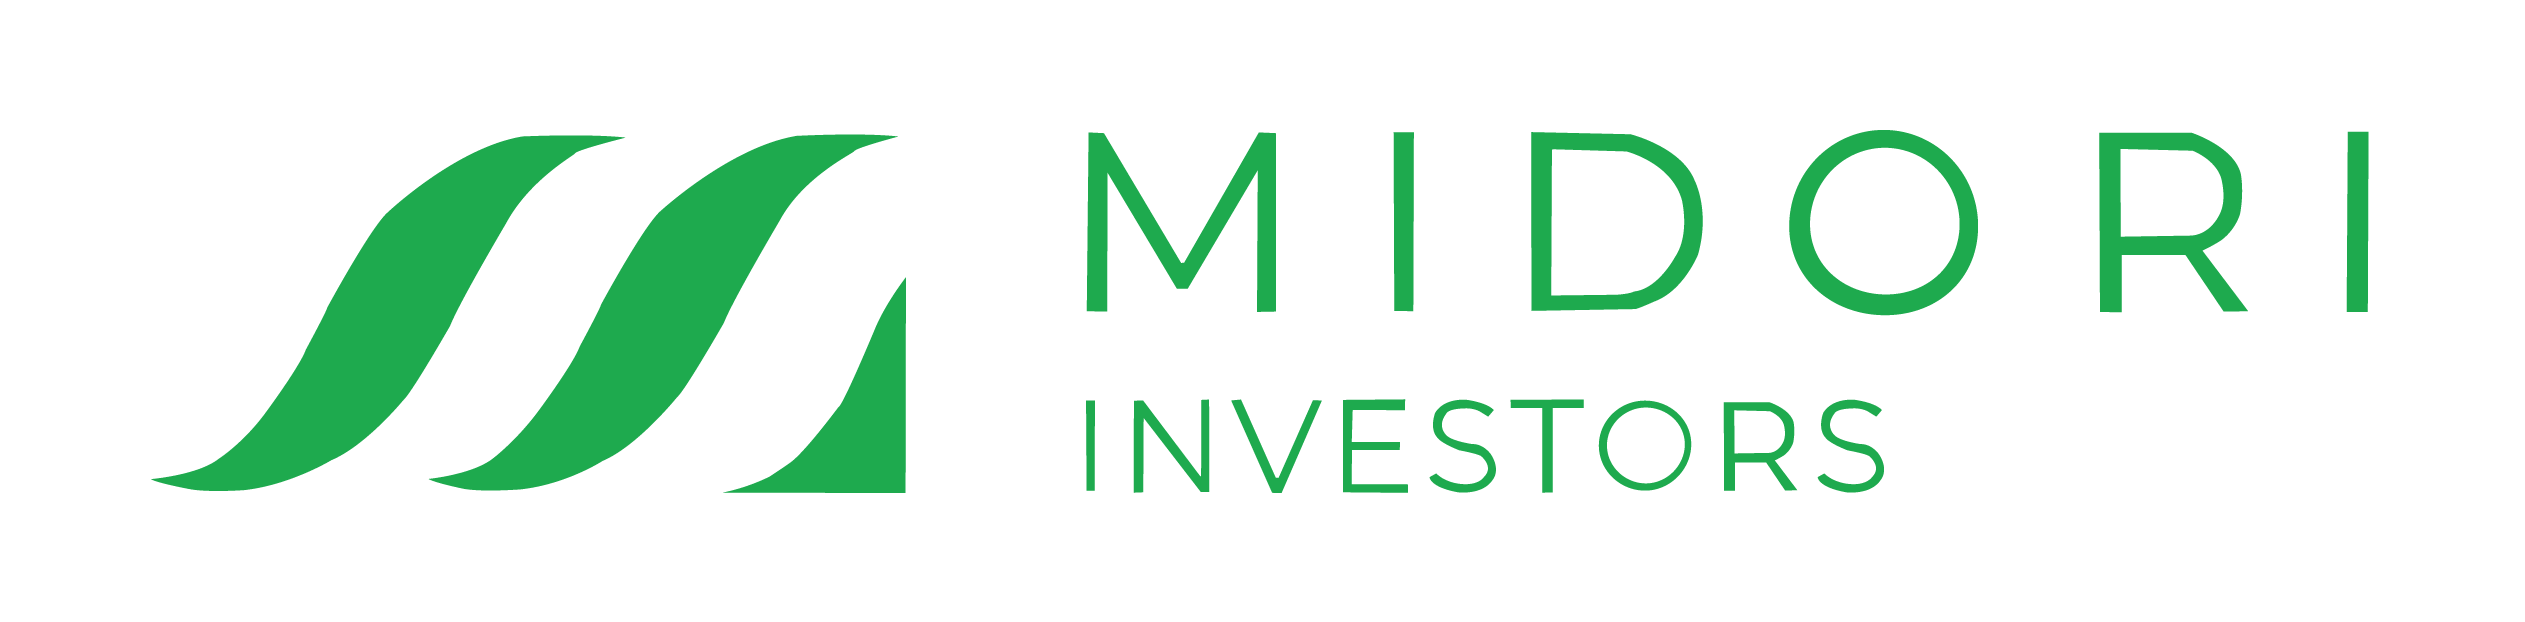 Midori Investors